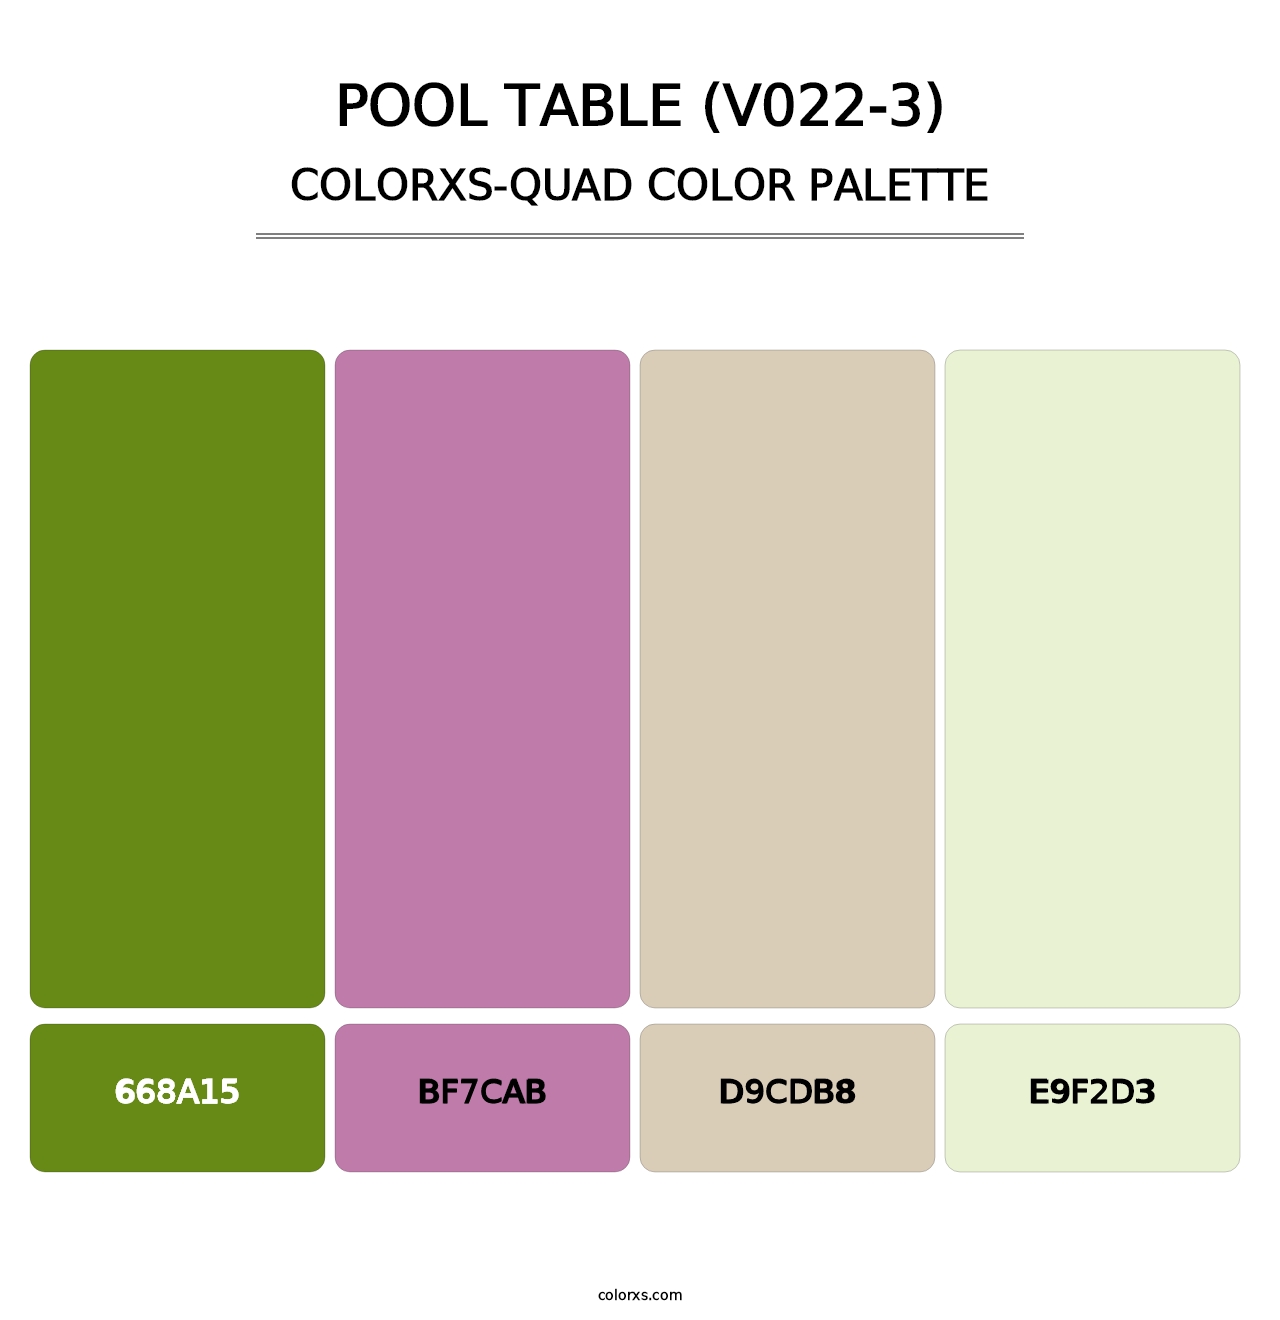 Pool Table (V022-3) - Colorxs Quad Palette